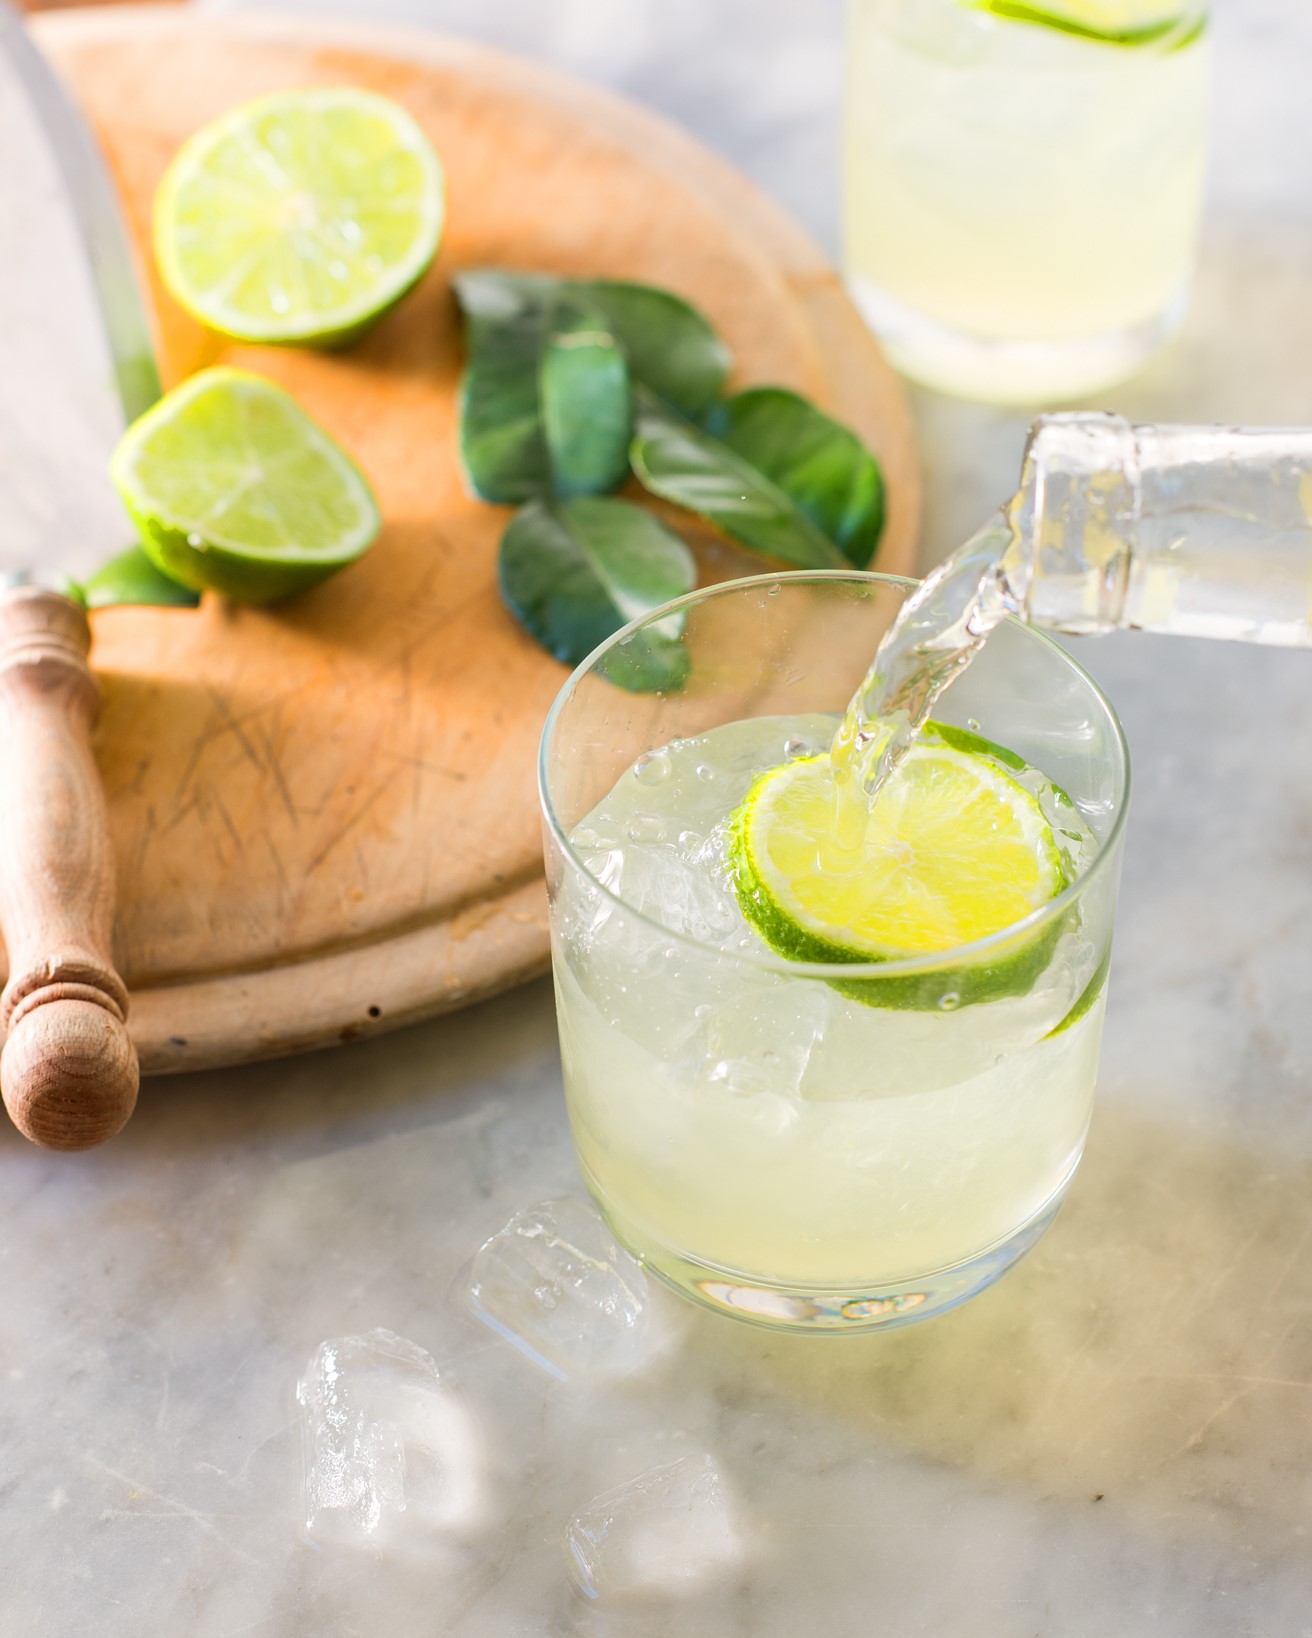 American Kaffir Lime and Lemon Cordial Appetizer